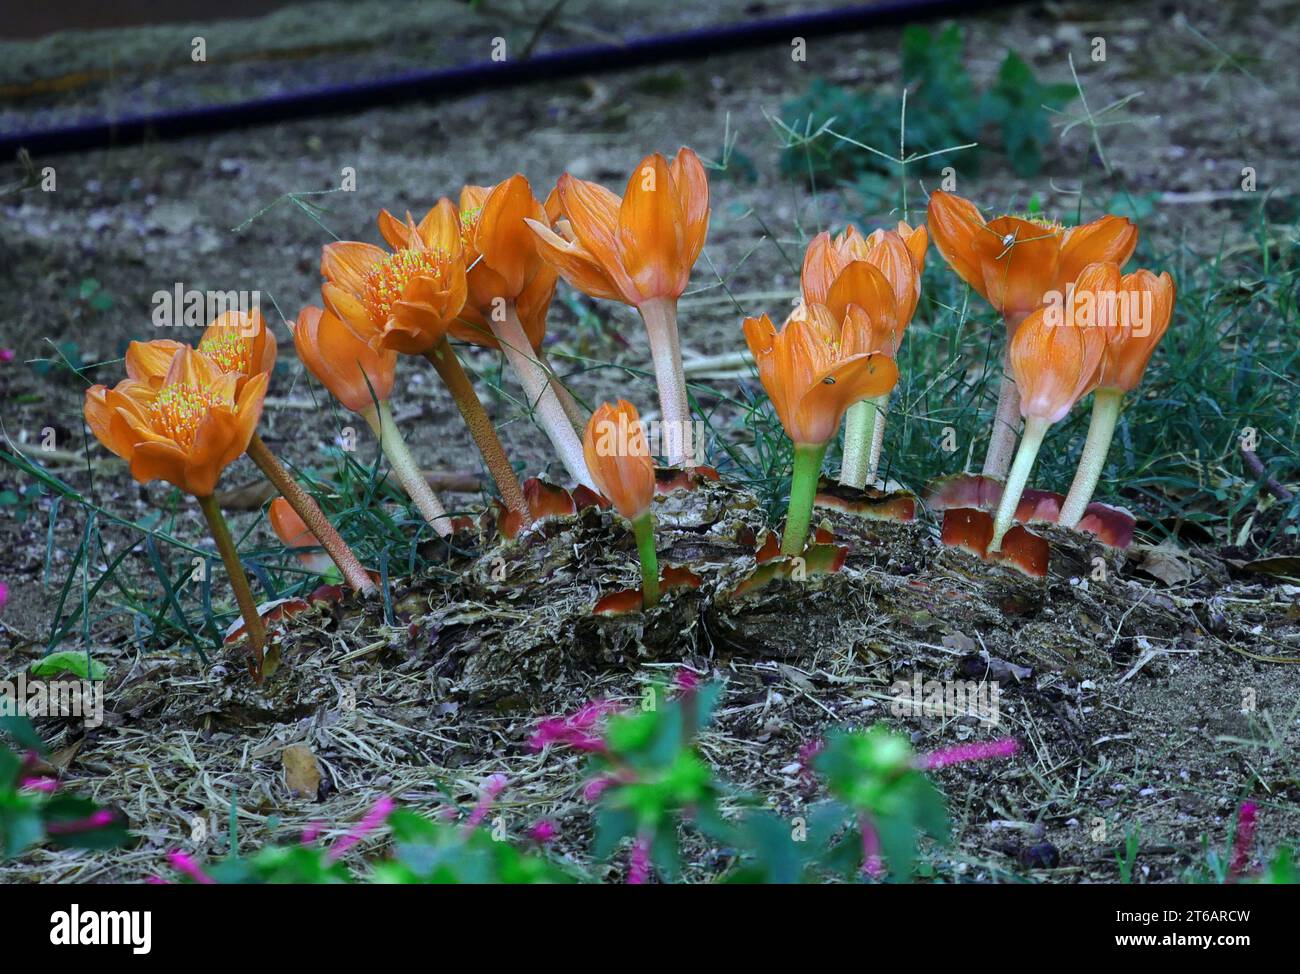 Blood Lily flower - haemanthus coccineus (Digital processing) Stock Photo